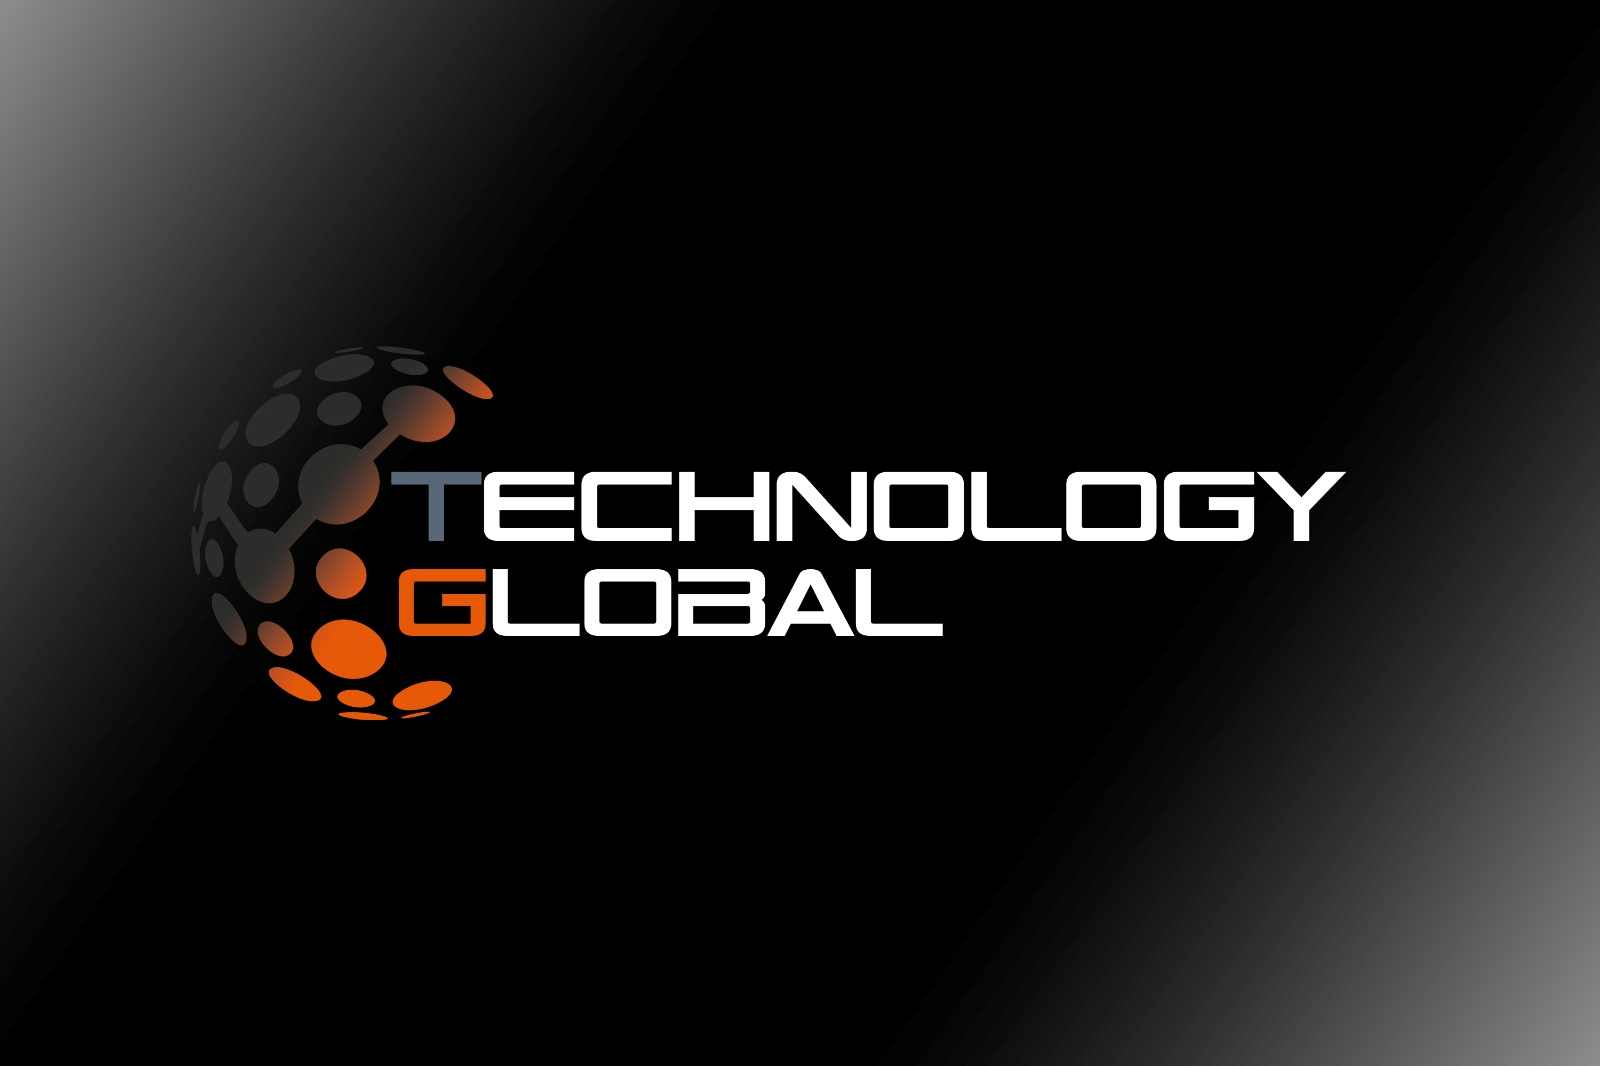 Technology Global